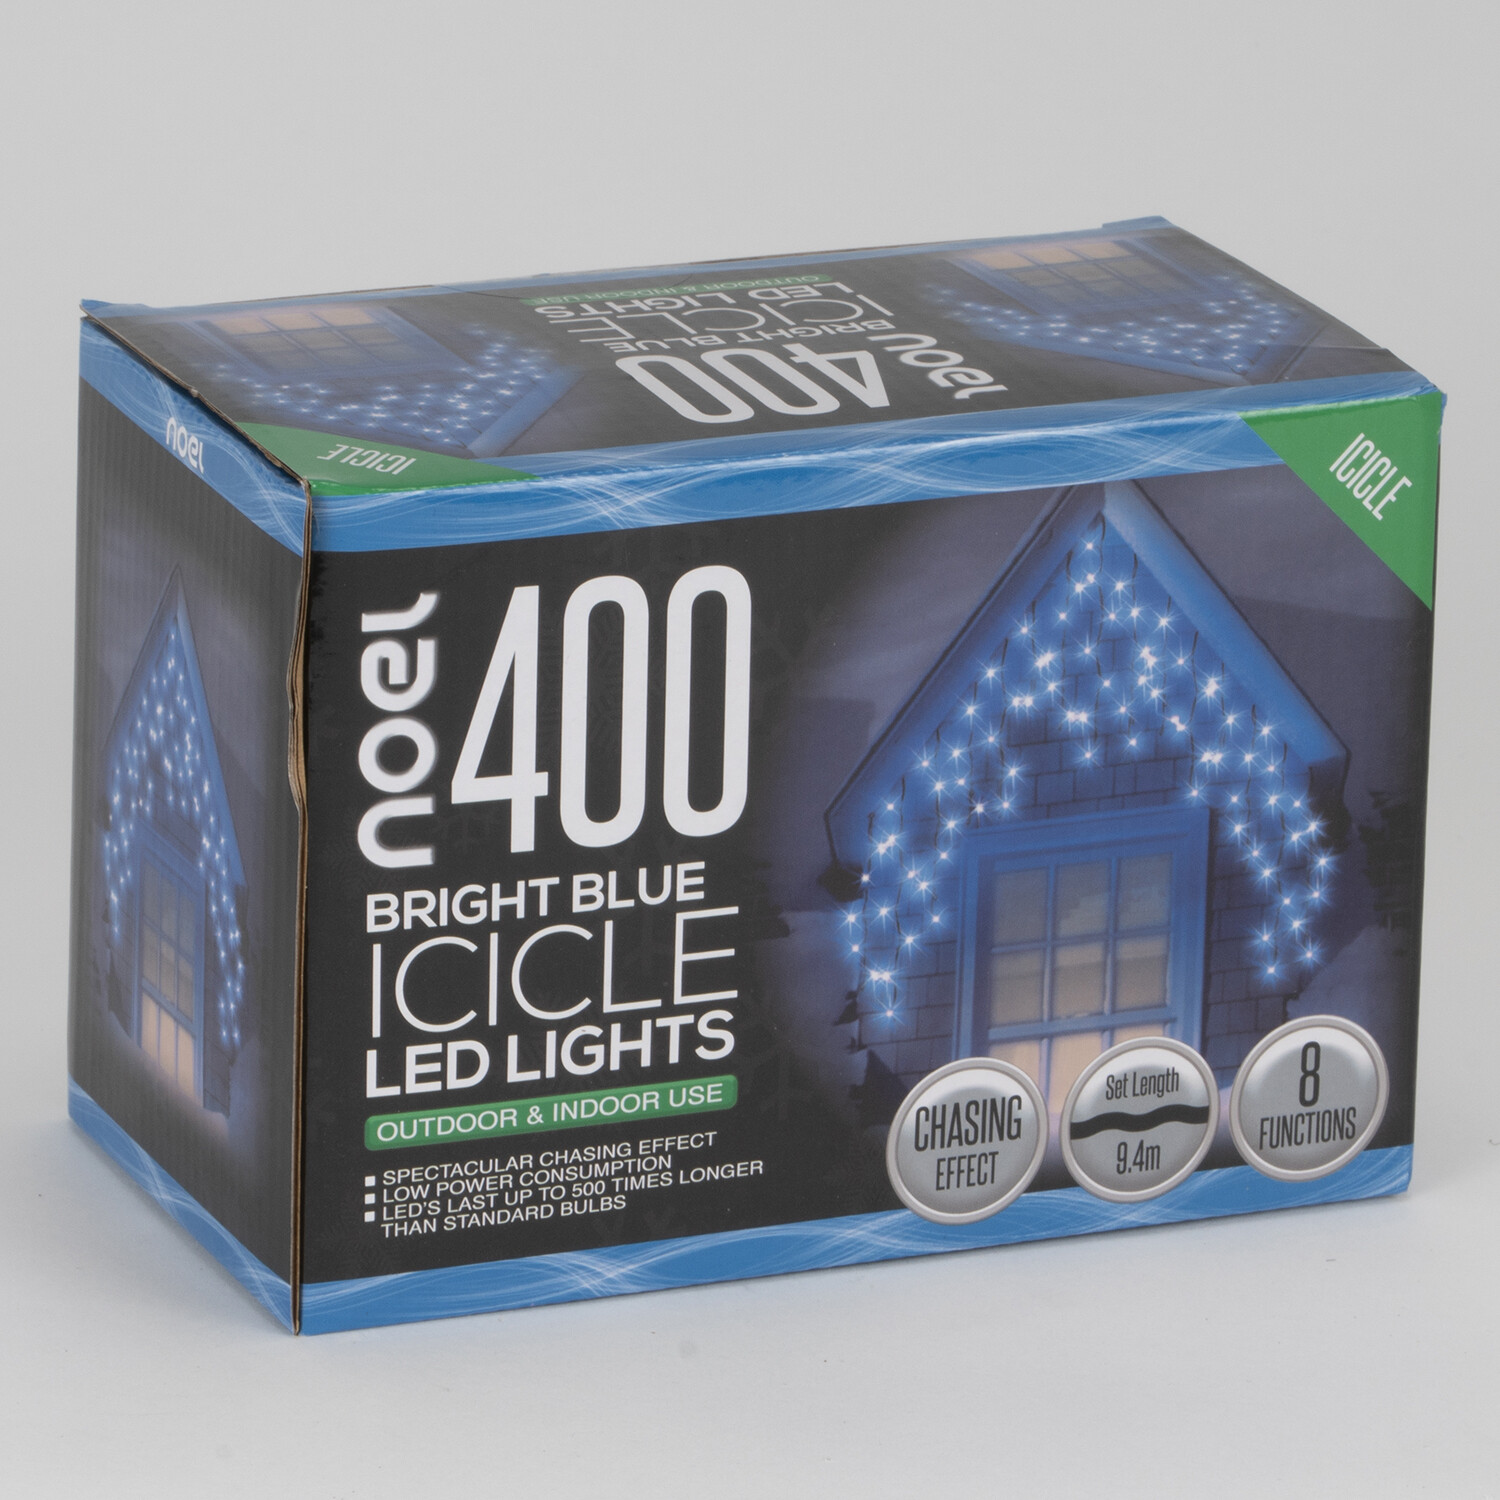 noel 400 Bright Blue Icicle LED Lights Image